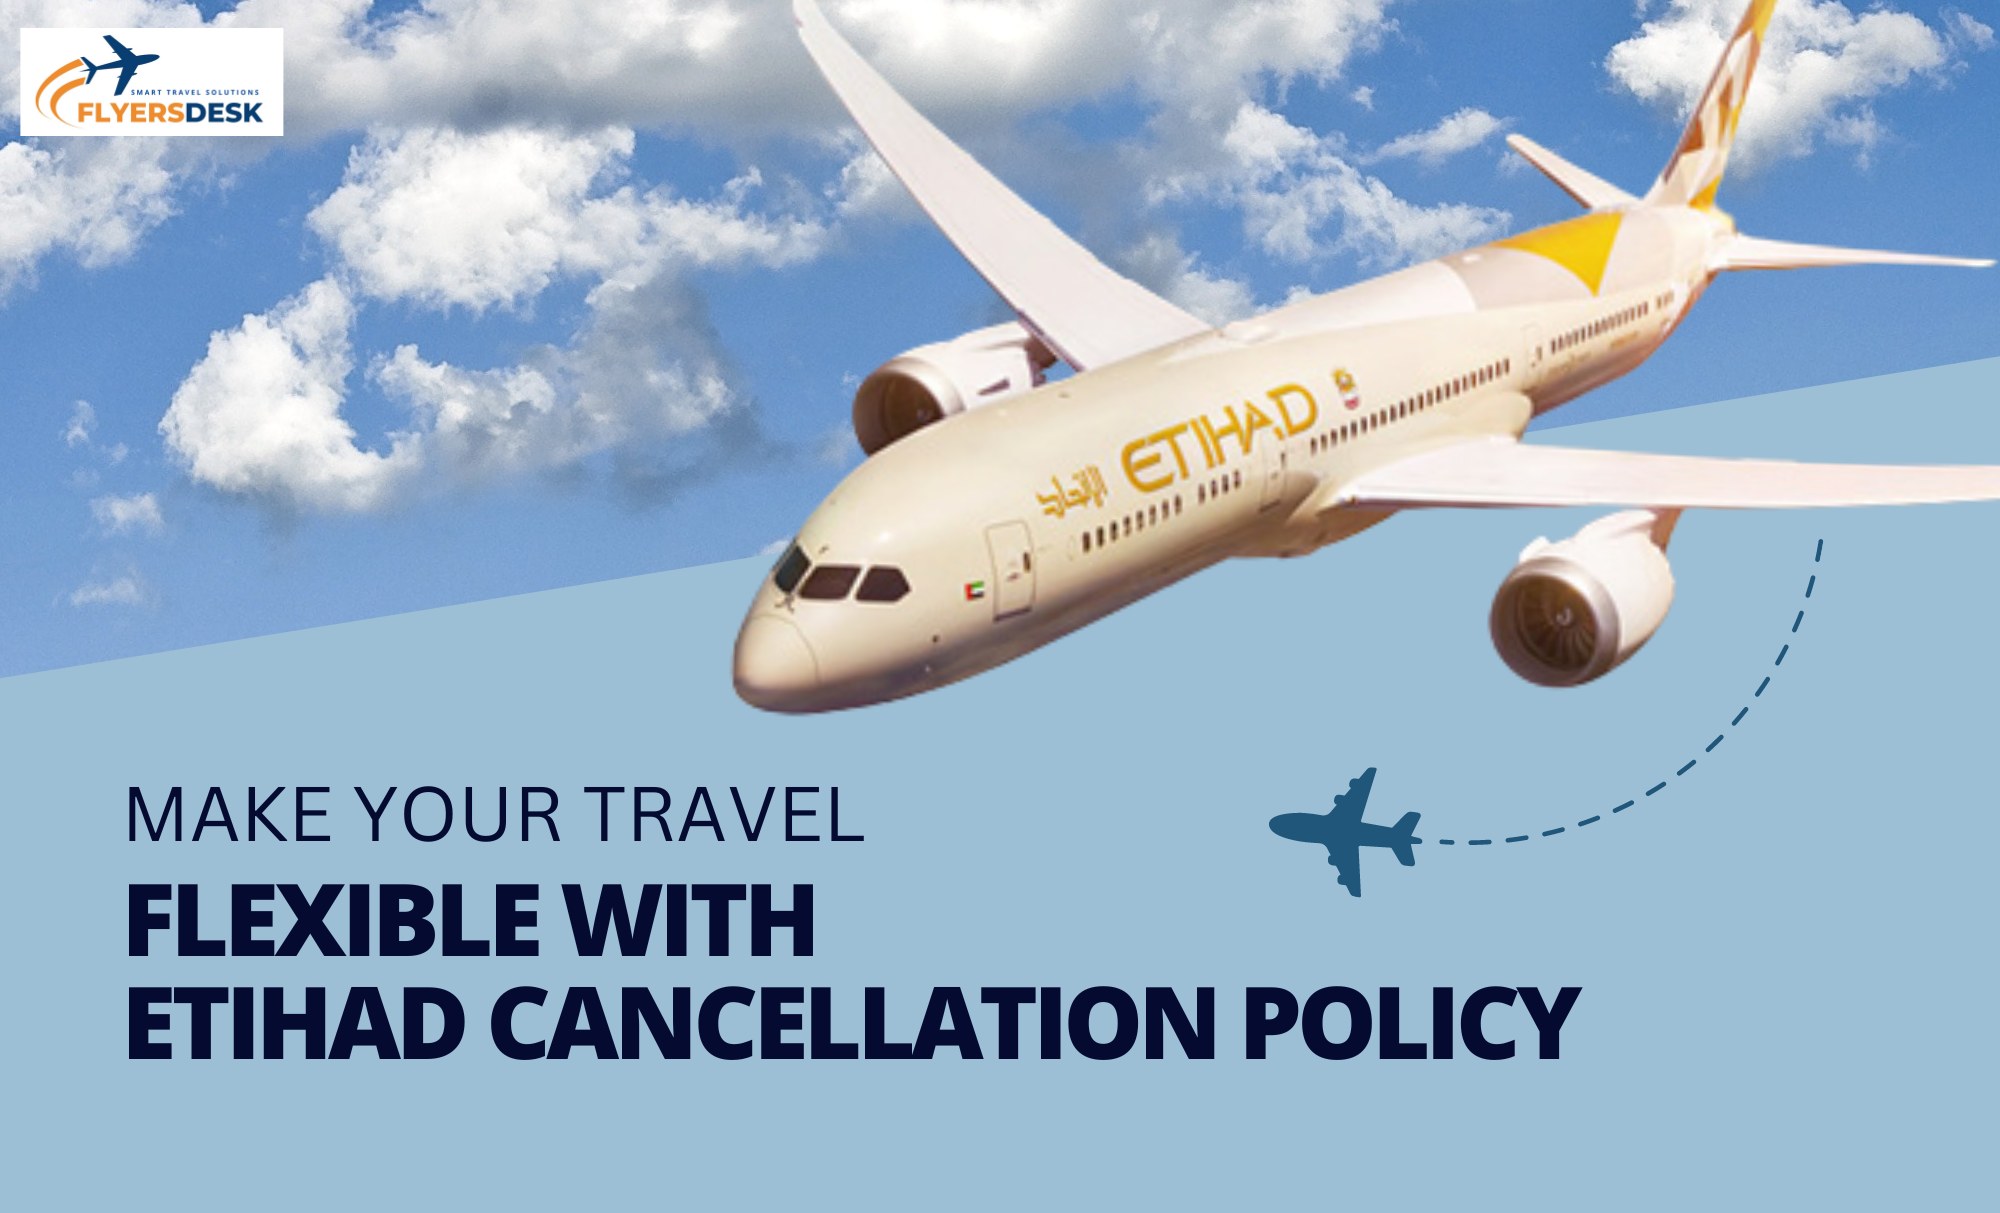 etihad airways cancellation policy